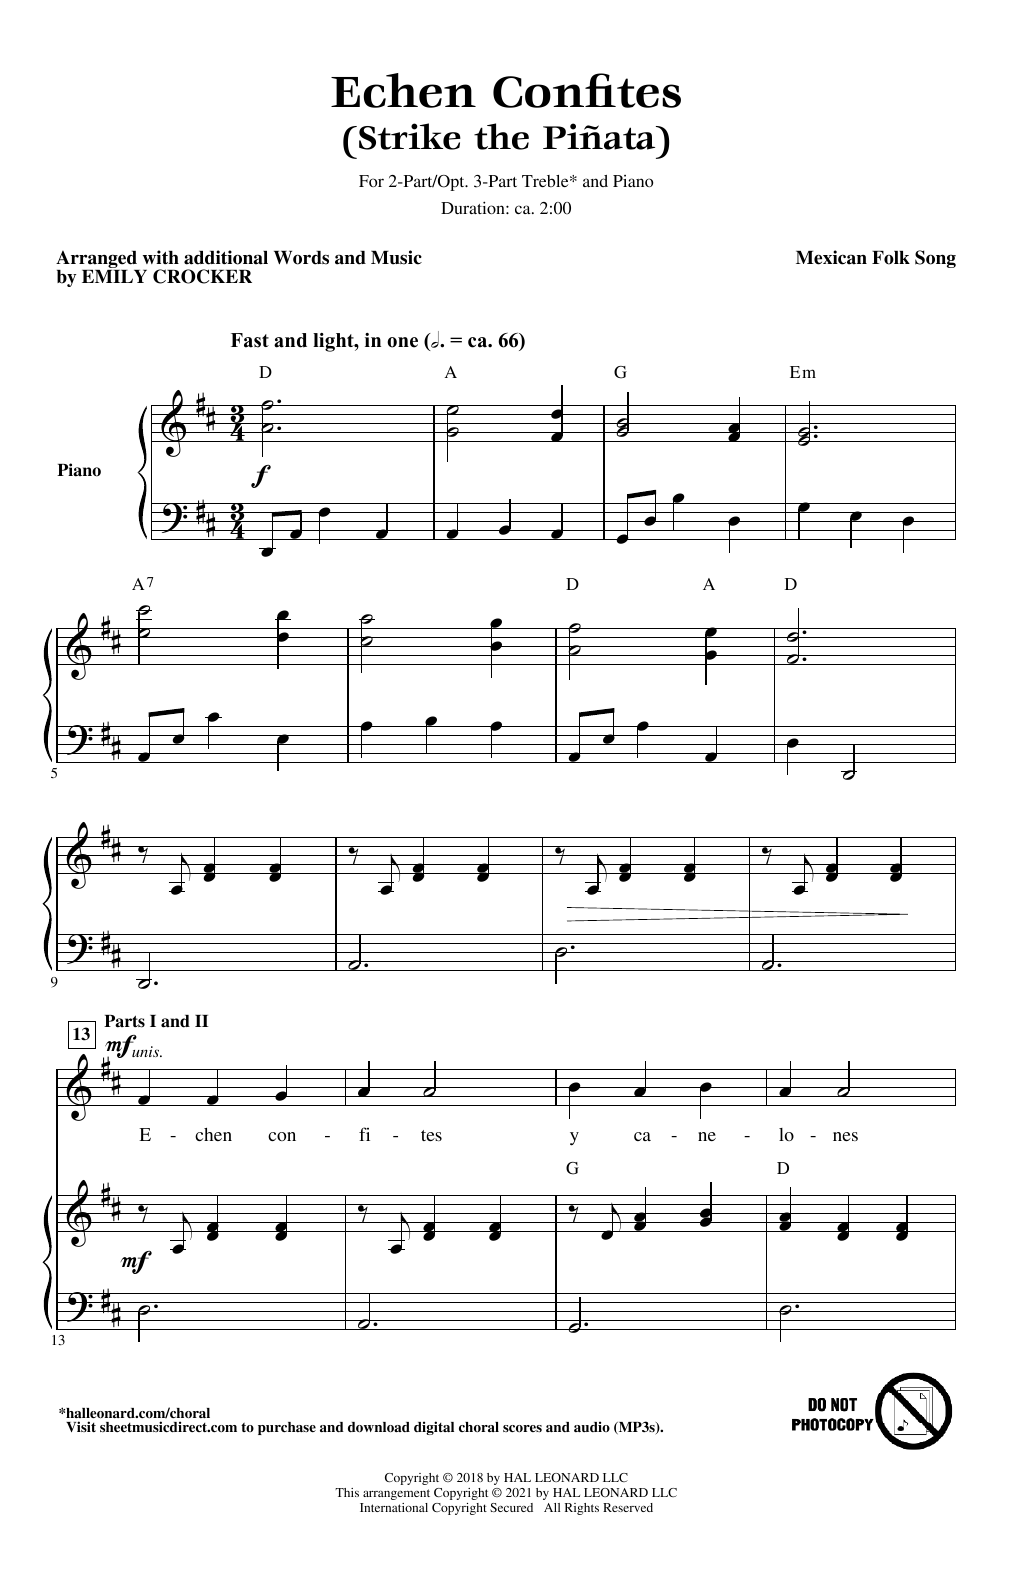 Download Mexican Folk Song Echen Confites (Strike the Piñata) (arr. Emily Crocker) Sheet Music and learn how to play 2-Part Choir, 3-Part Mixed Choir PDF digital score in minutes